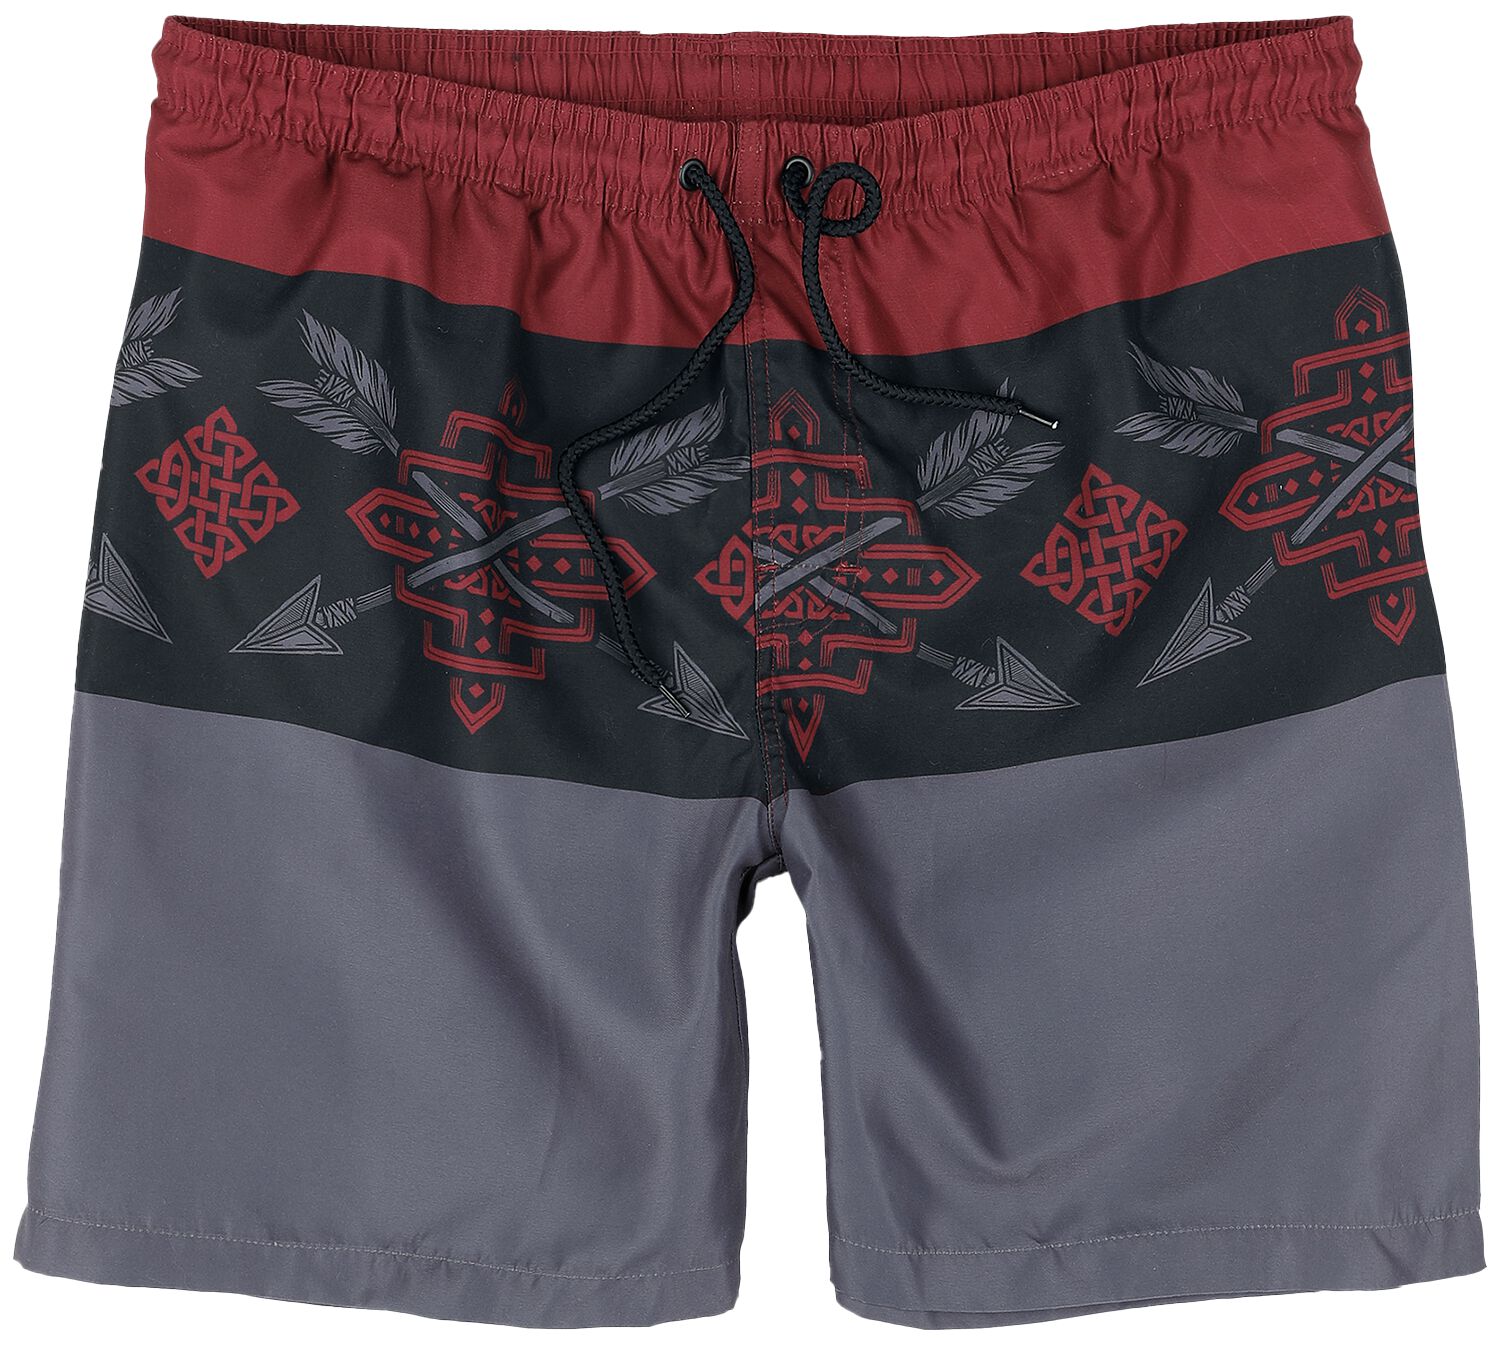 Black Premium by EMP Tricolor Swim Shorts with Arrow Print Badeshort rot schwarz in M